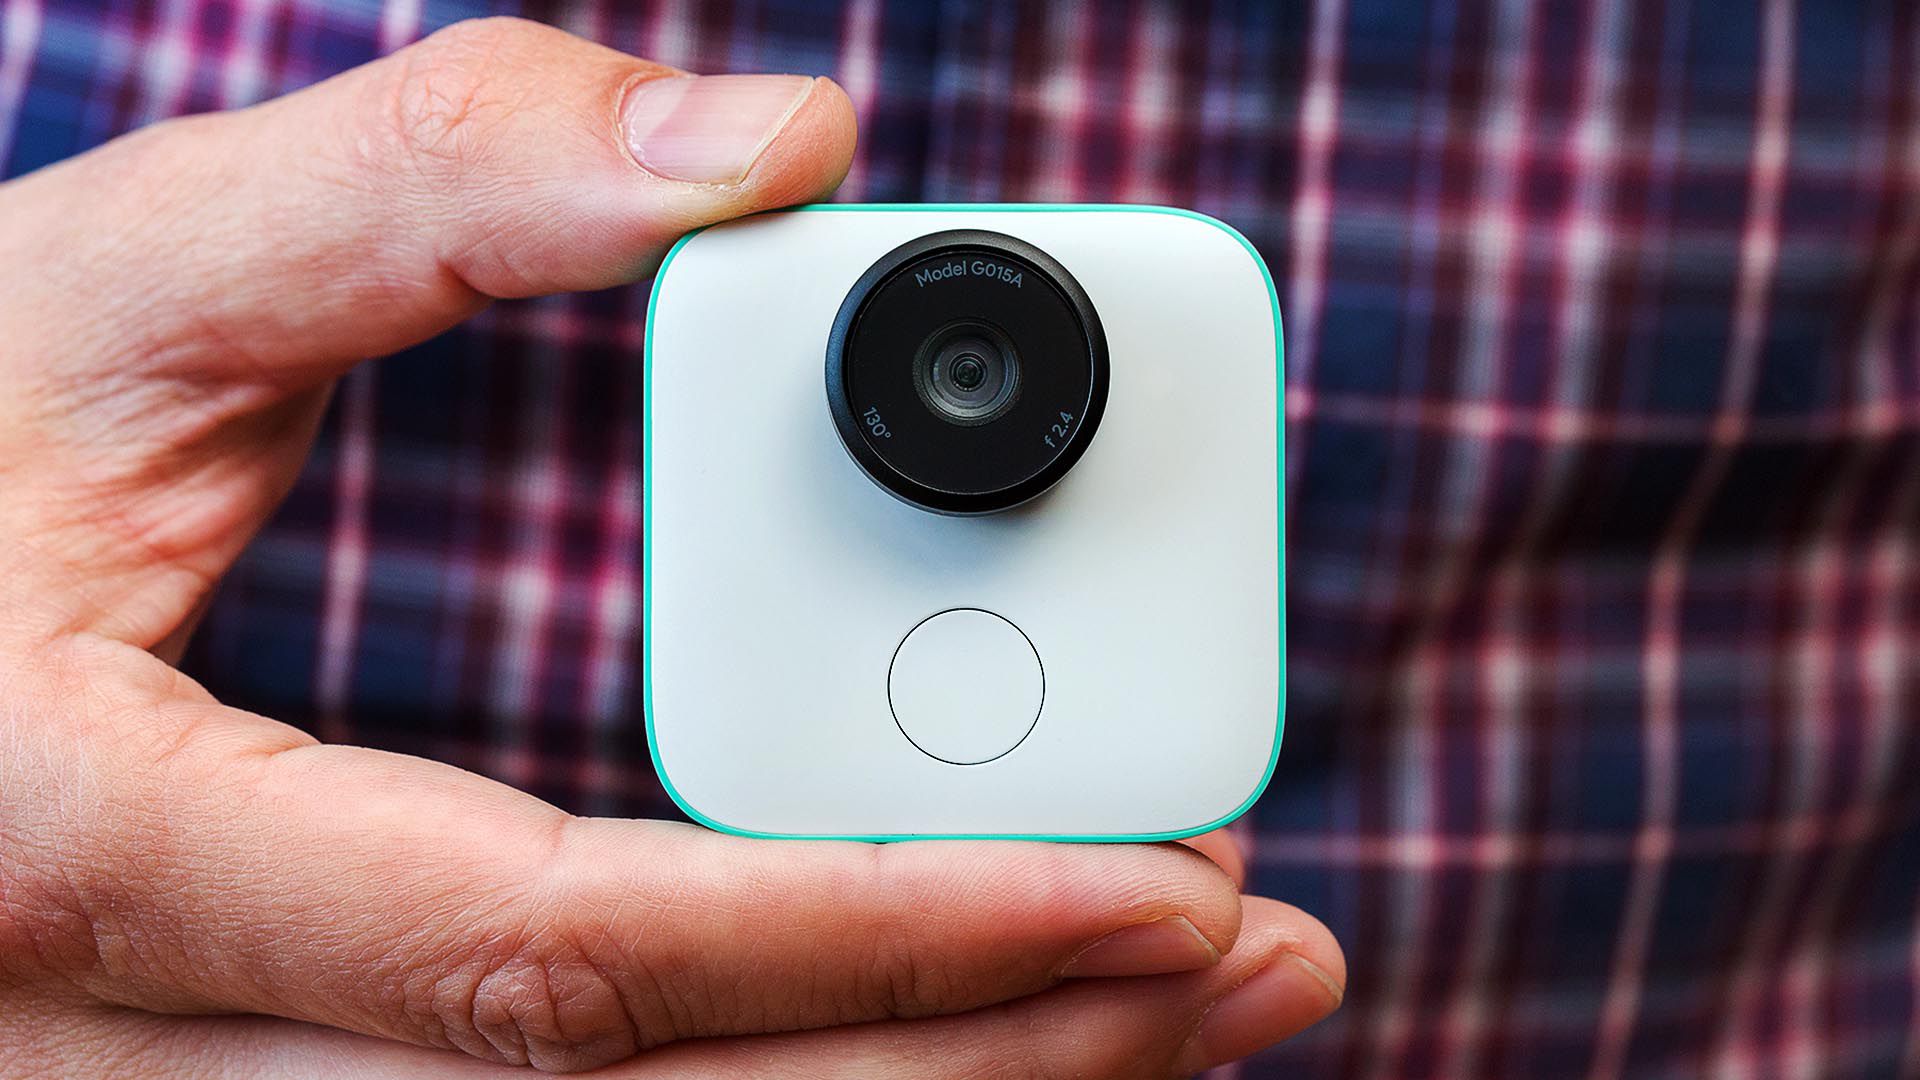 Google Clips AI-Powered Camera